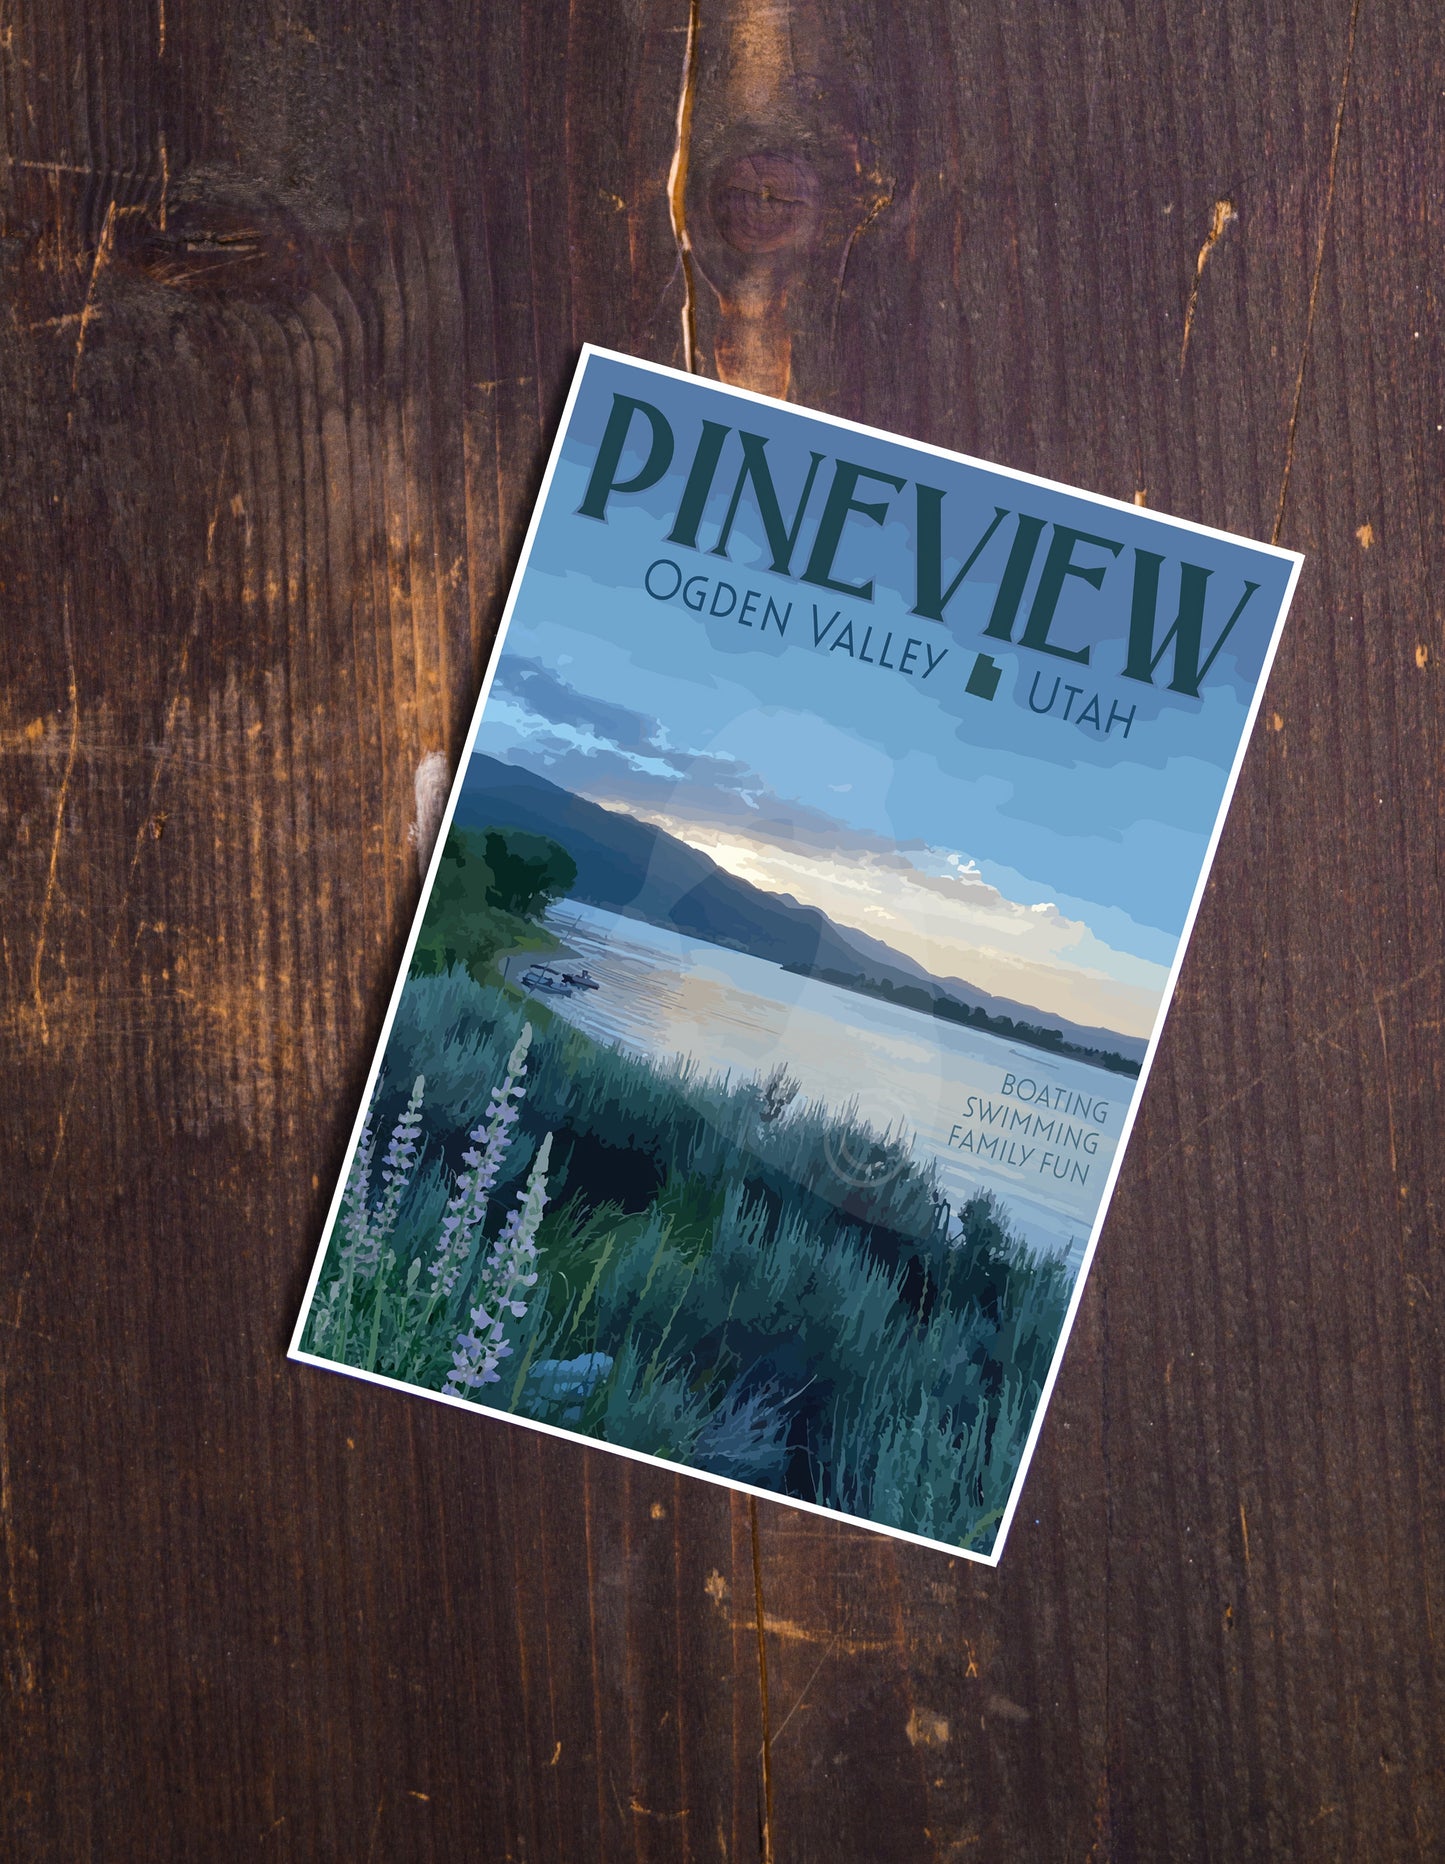 Pineview Reservoir Print, Ogden Valley Poster, Vintage Style Travel Art